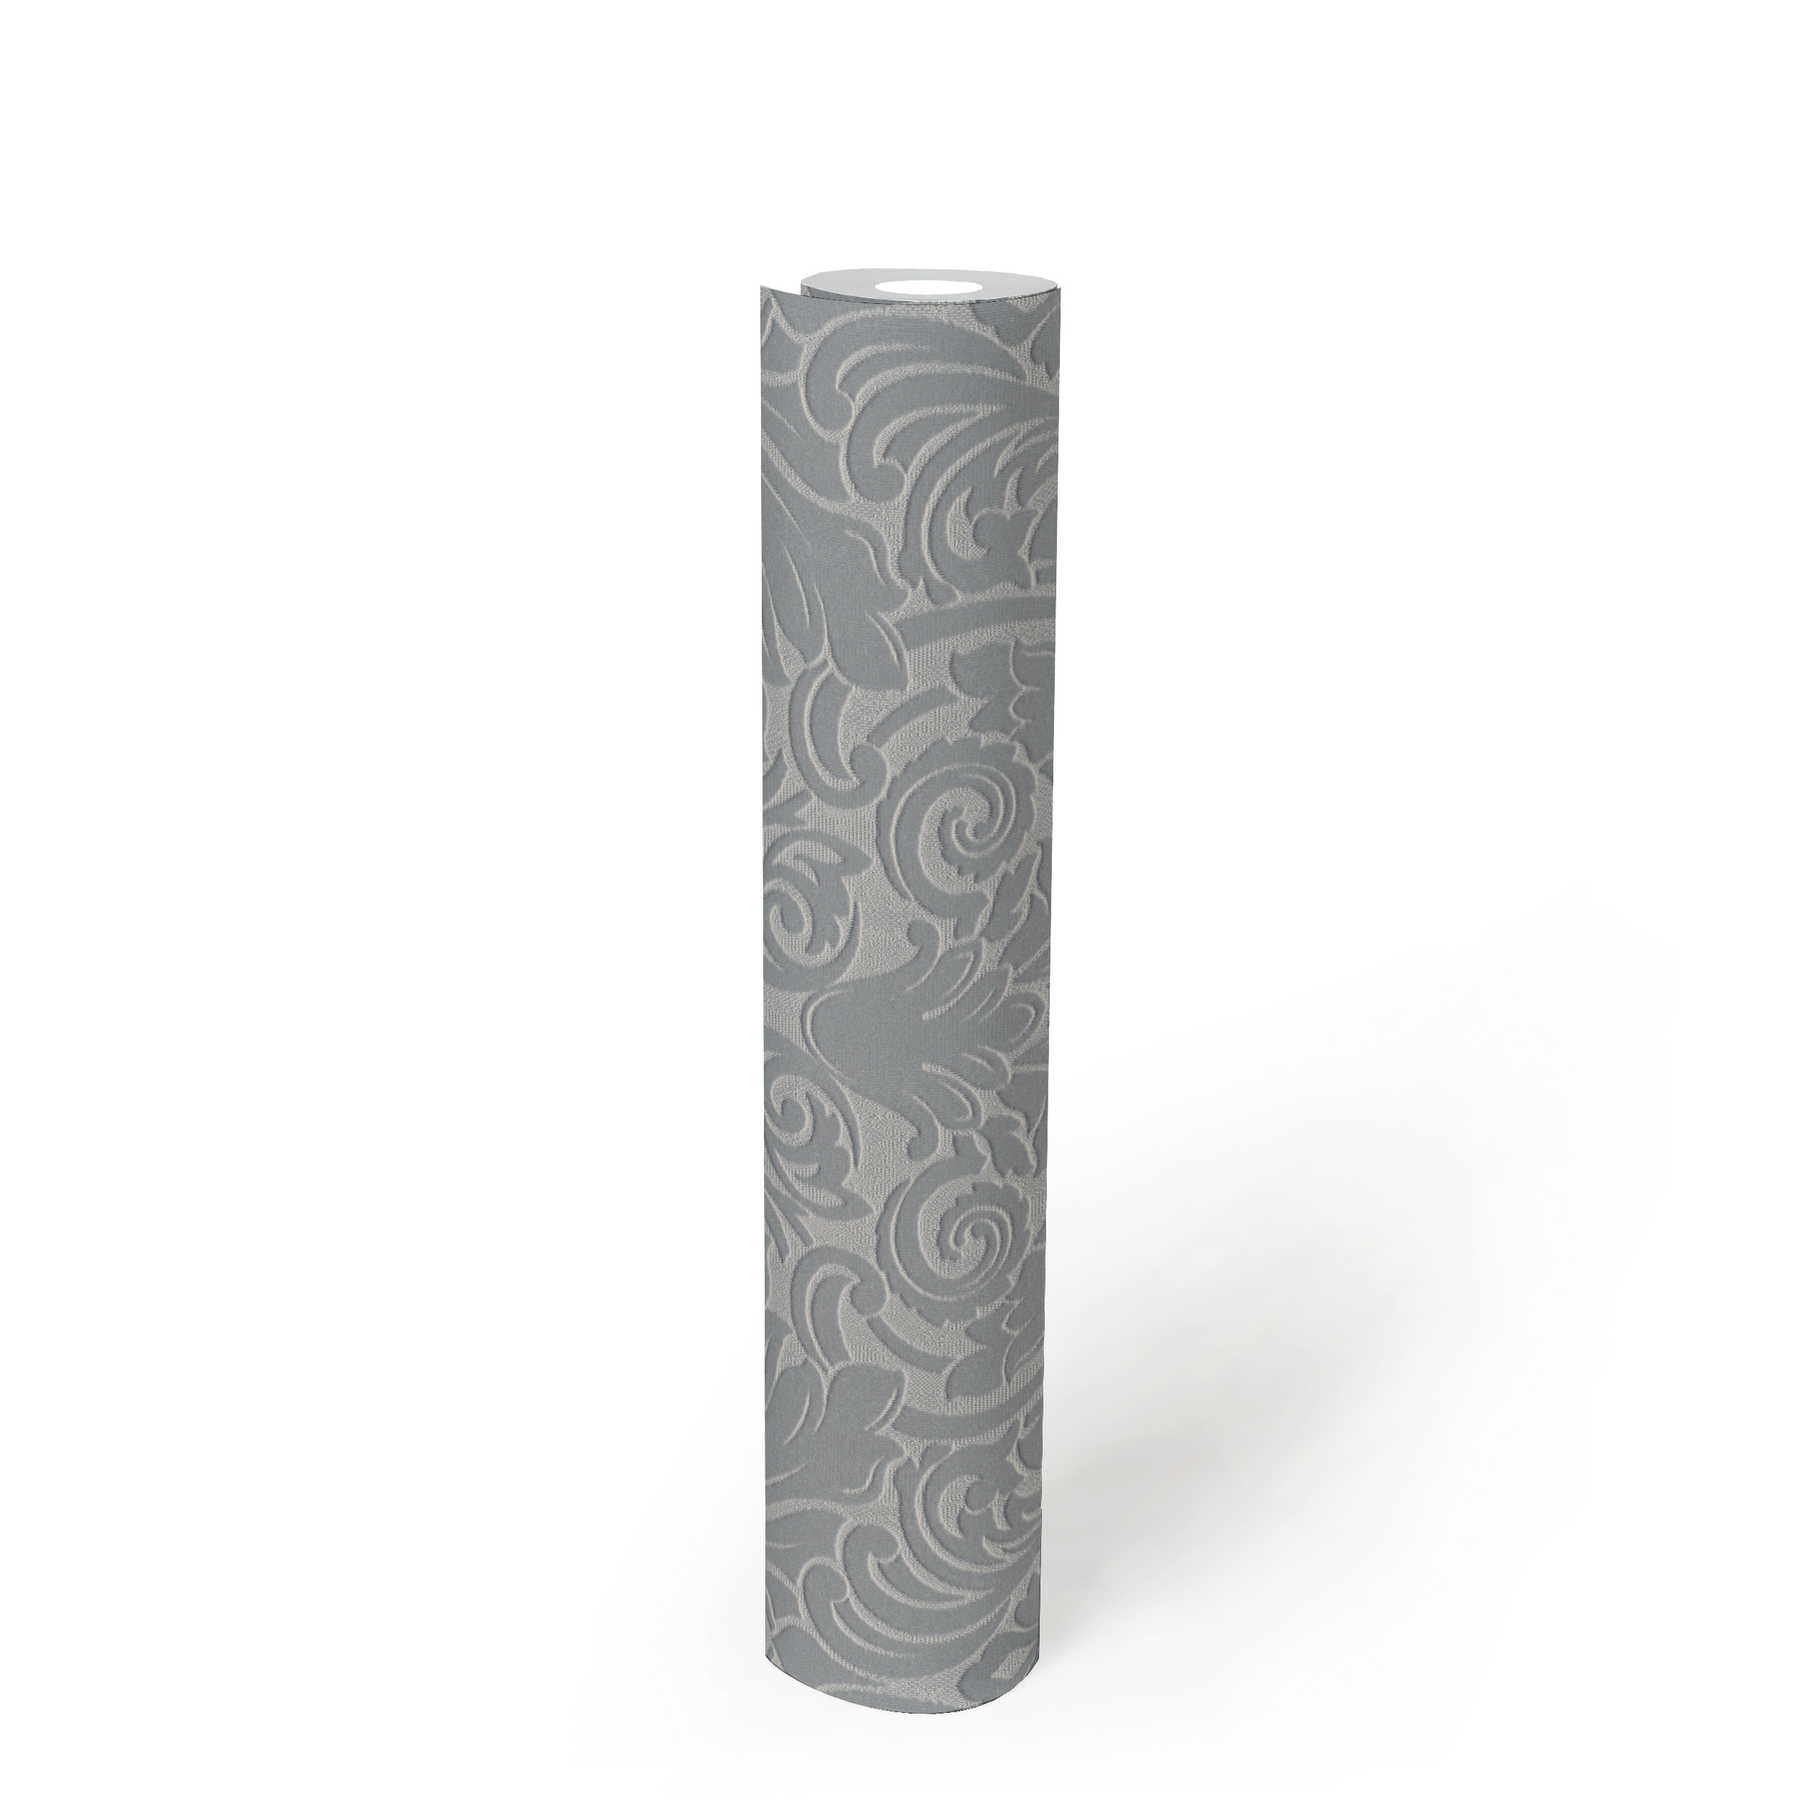             Metallic Barock Tapete mit 3D Strukturprägung – Grau
        